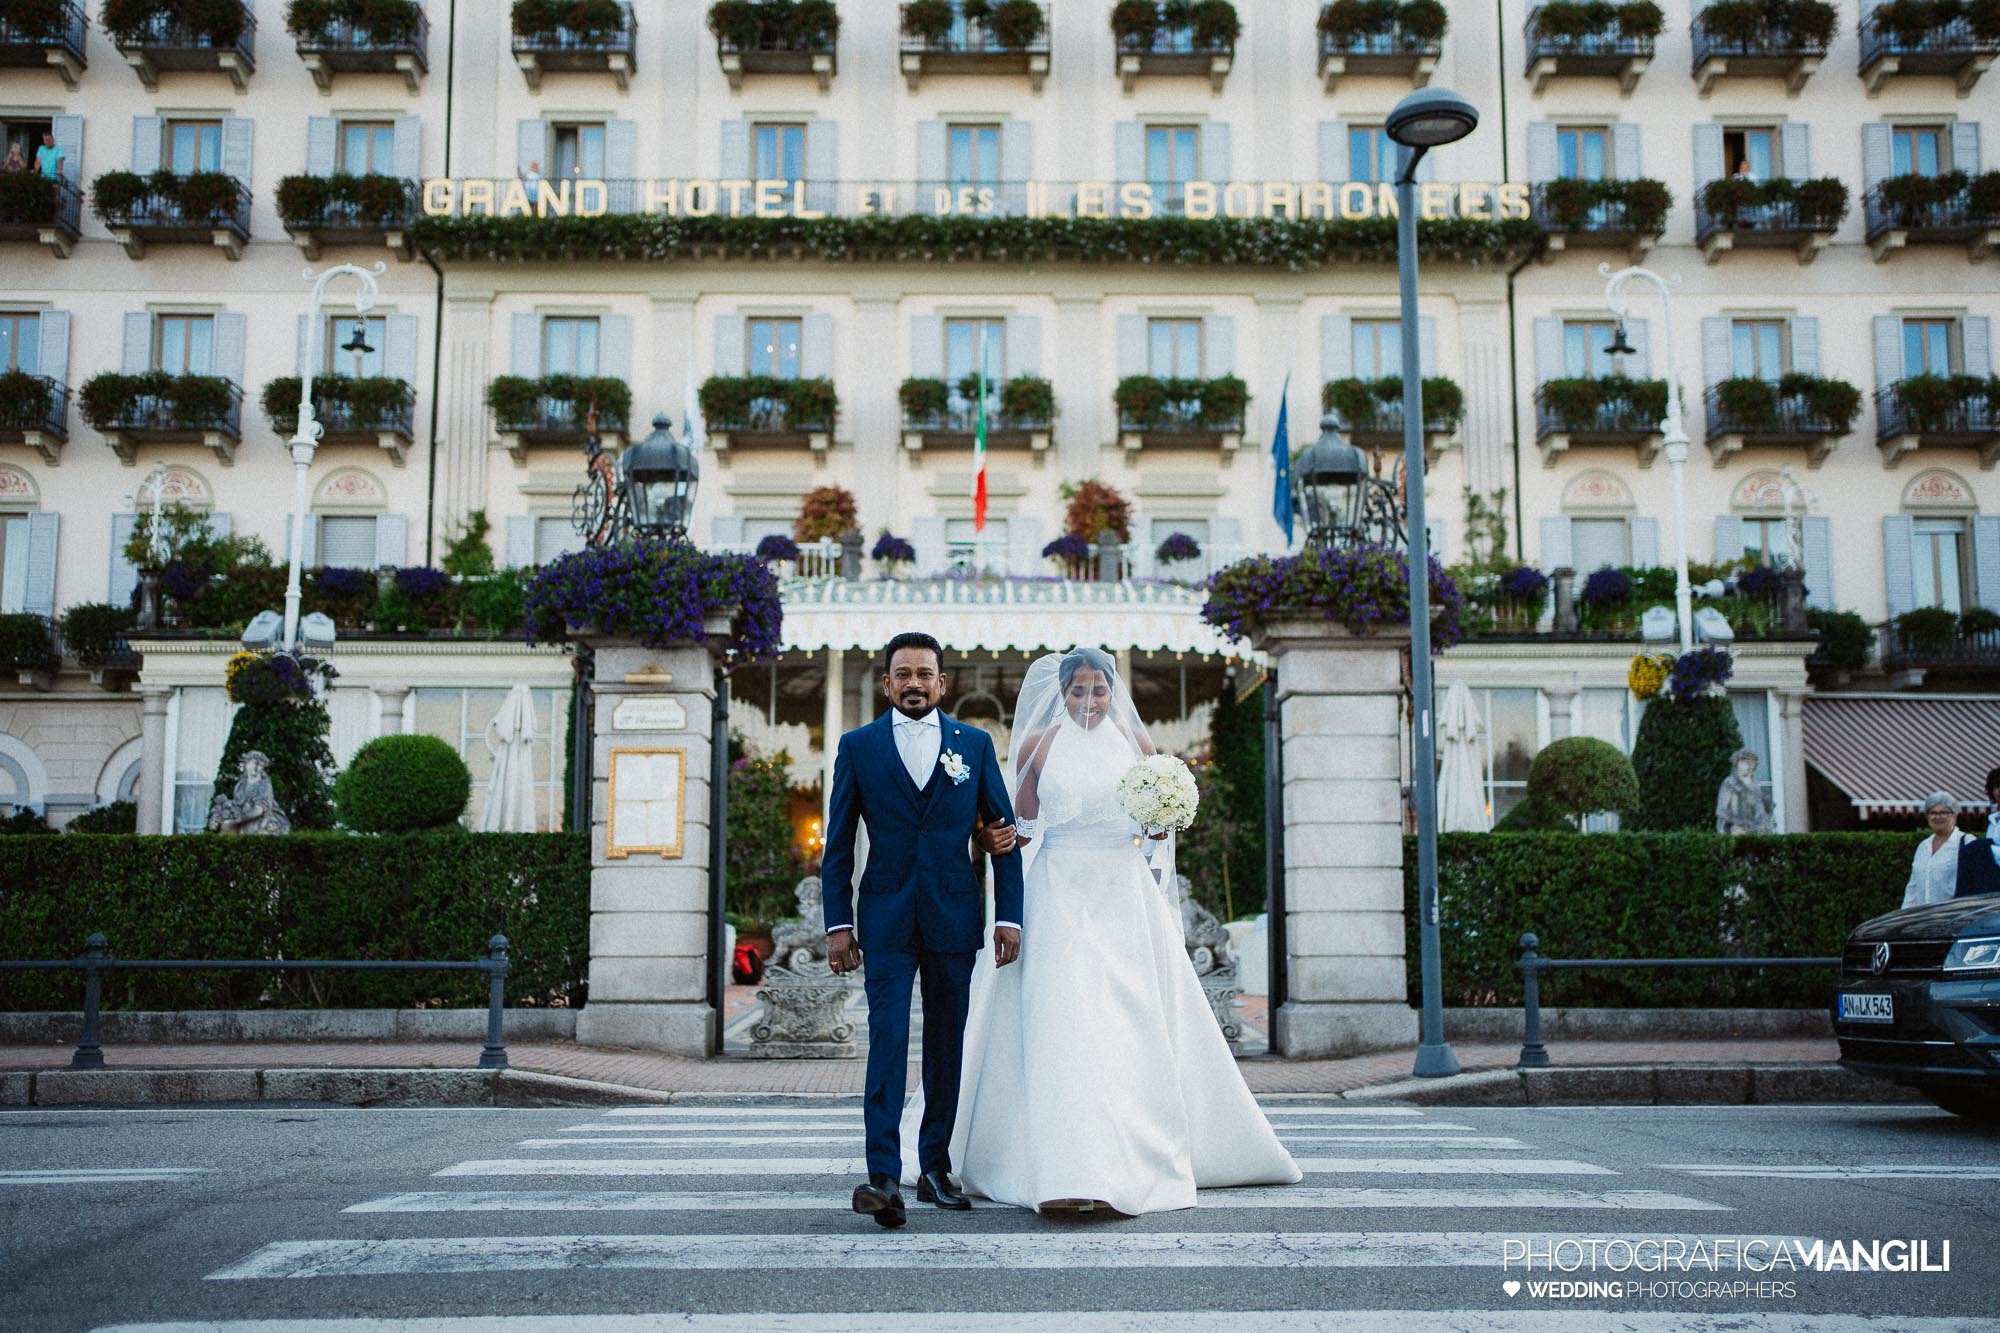 wedding photo grand hotel des iles borromees lake maggiore italy amanda davide 067